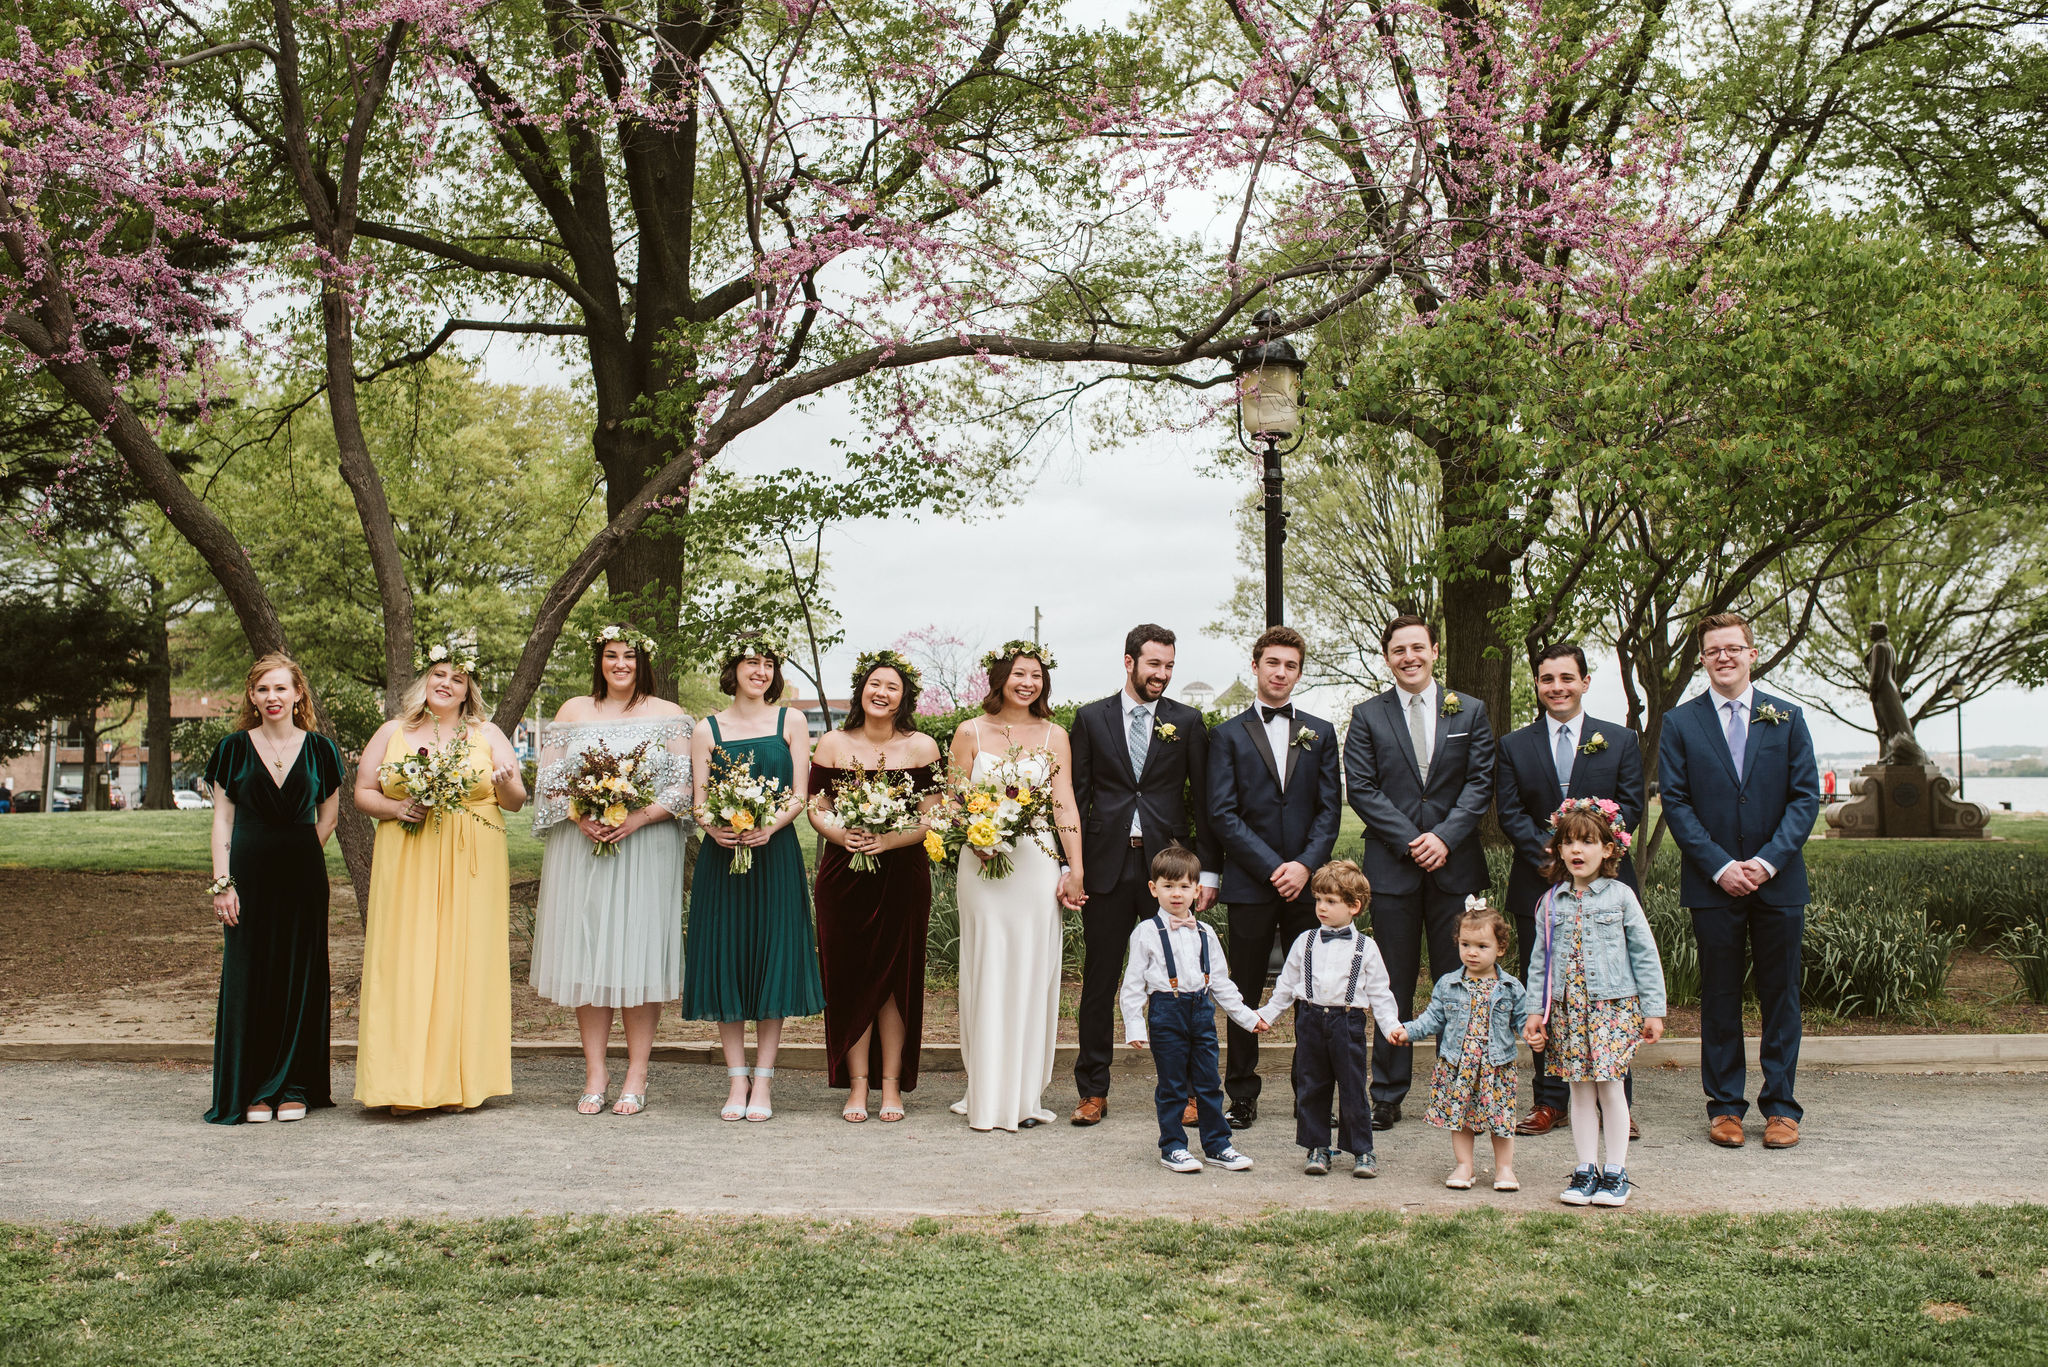  Washington DC, Baltimore Wedding Photographer, Alexandria, Old Town, Jewel Tone, Romantic, Modern, Portrait of entire wedding party in park 